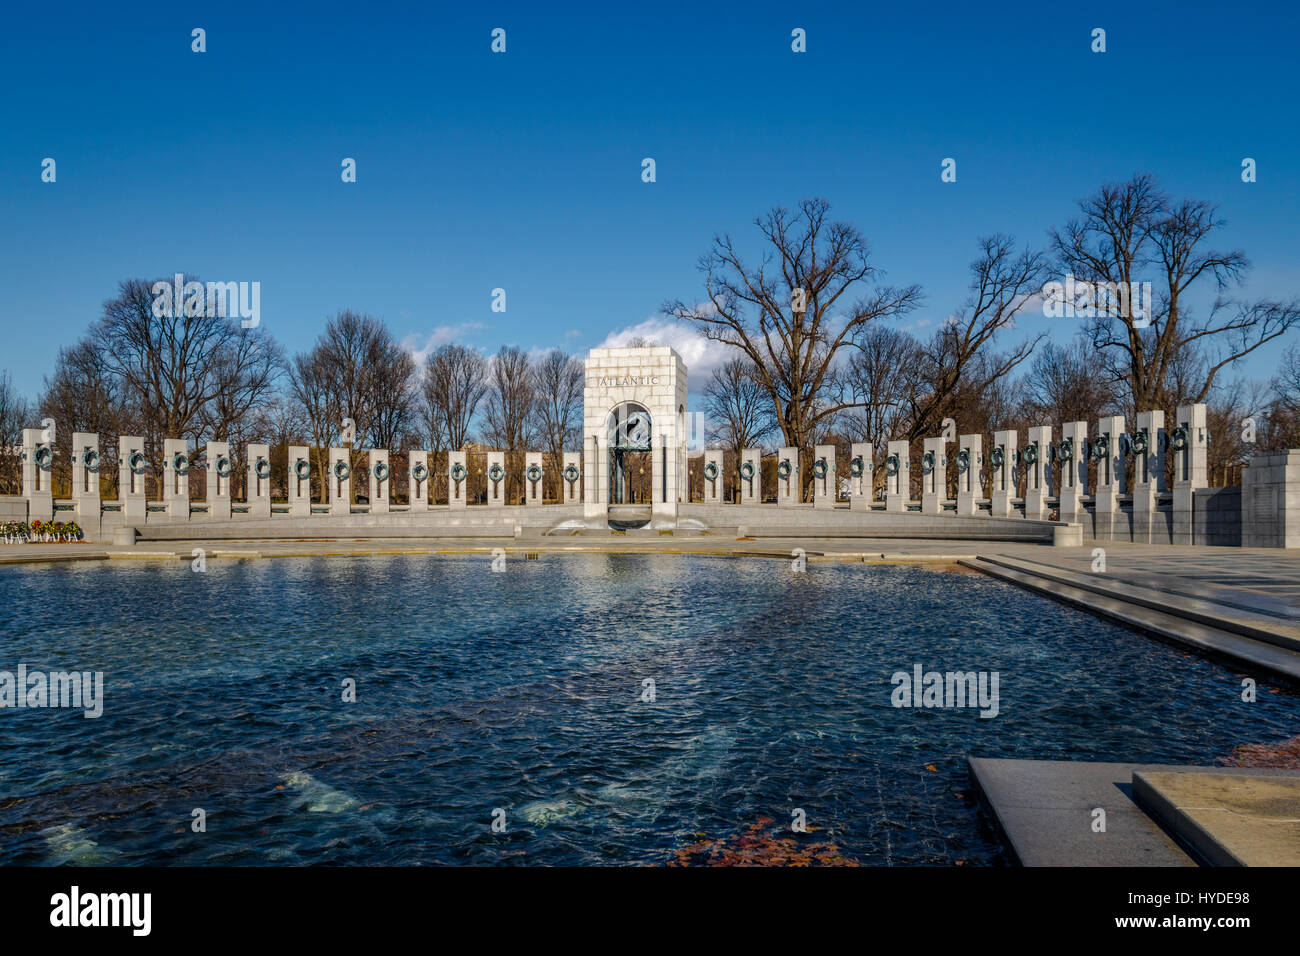 World War II Memorial - Washington, D.C., USA Banque D'Images